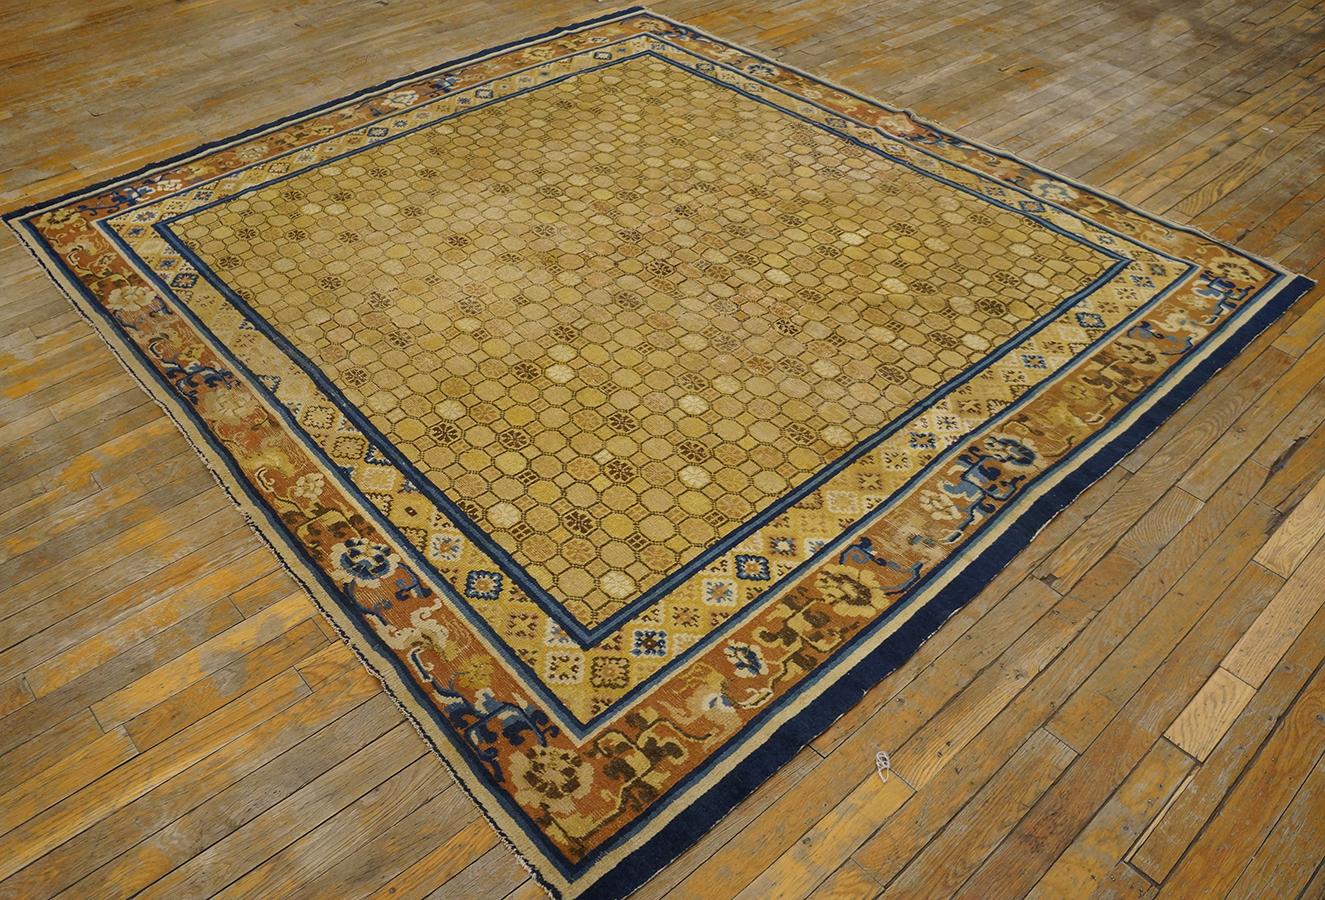 Antique Chinese - Ningxia rug, size: 6' 8'' x7' 4''.